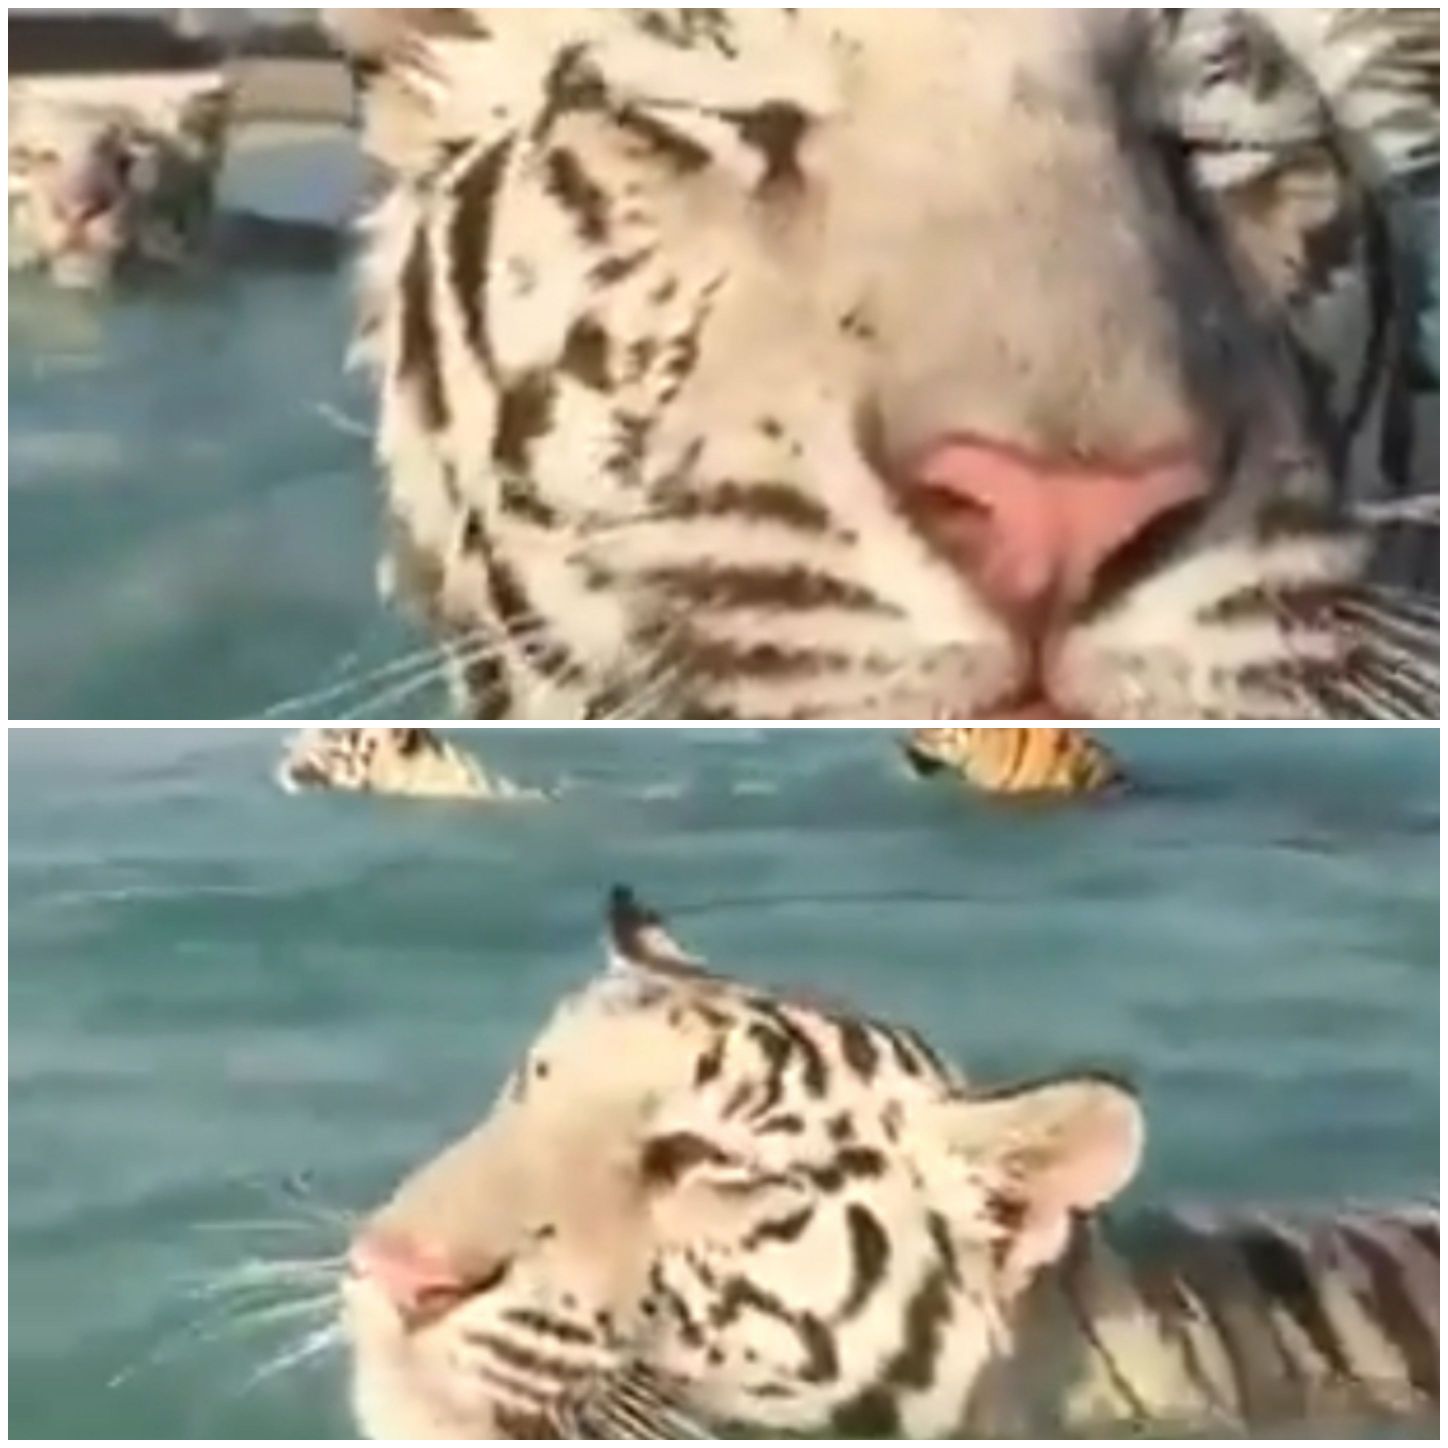 Big cats enjoy swimming together